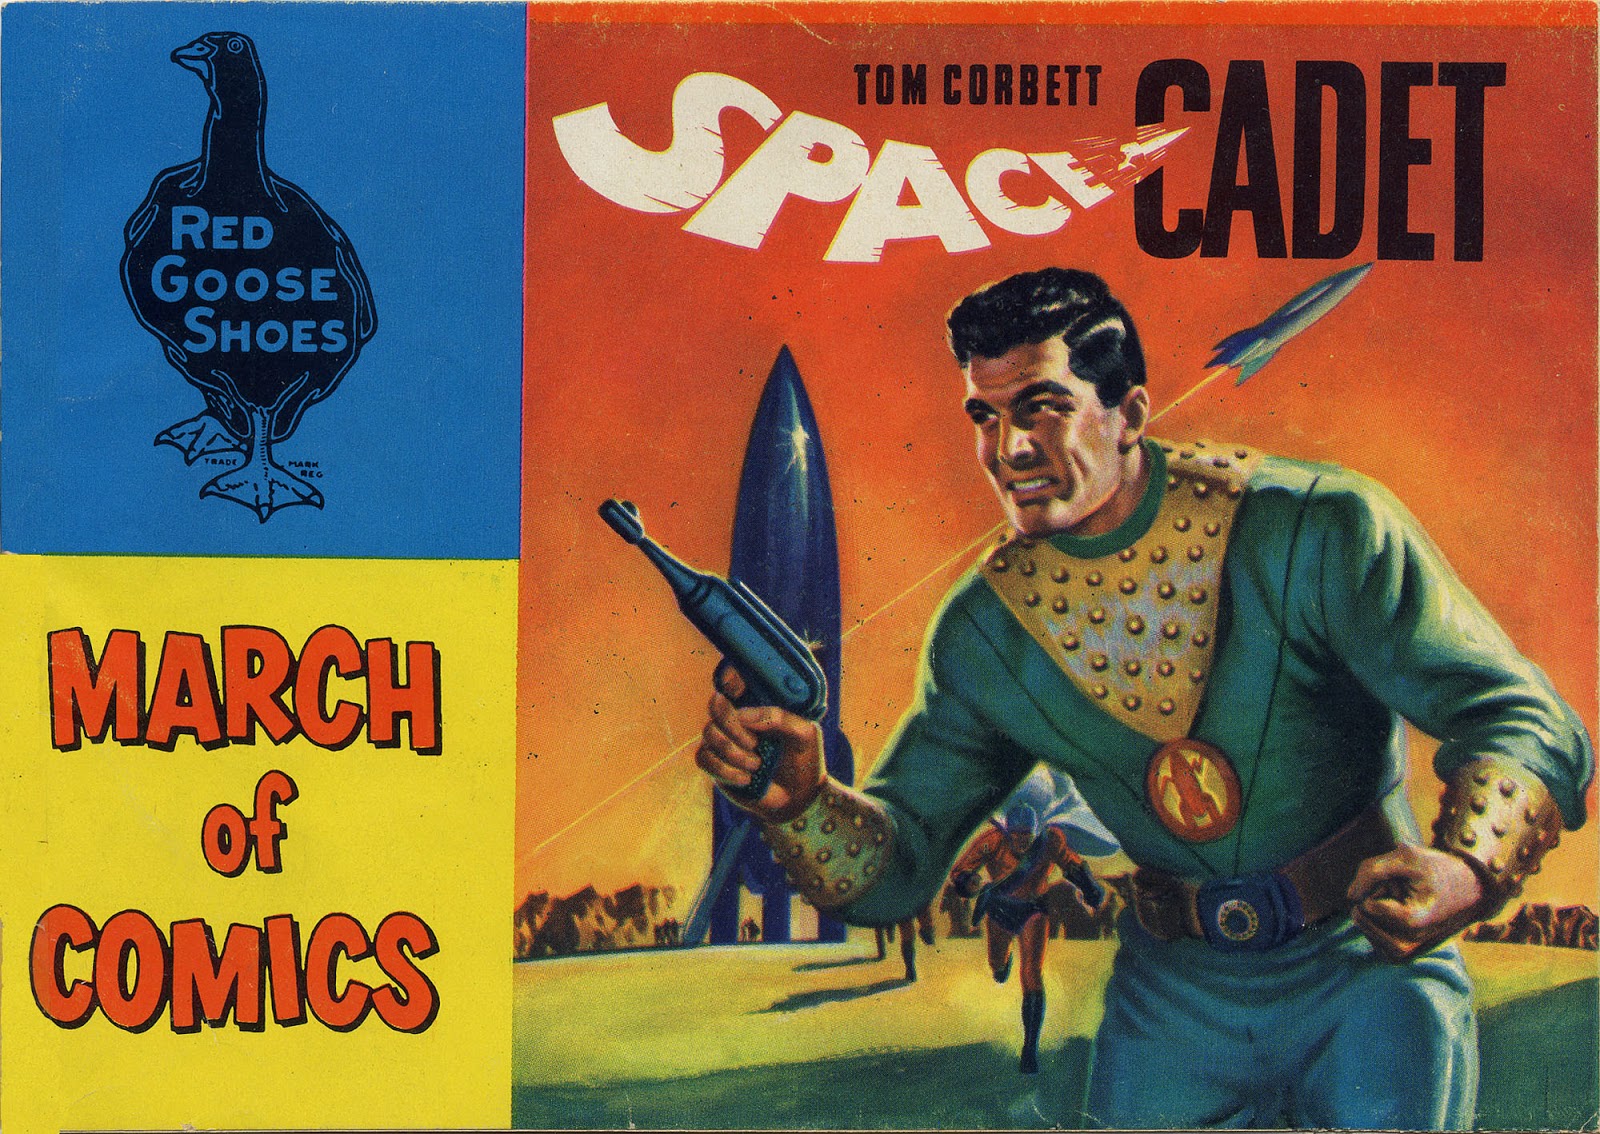 March of Comics 102 - Tom Corbett Space Cadet - 01a.jpg